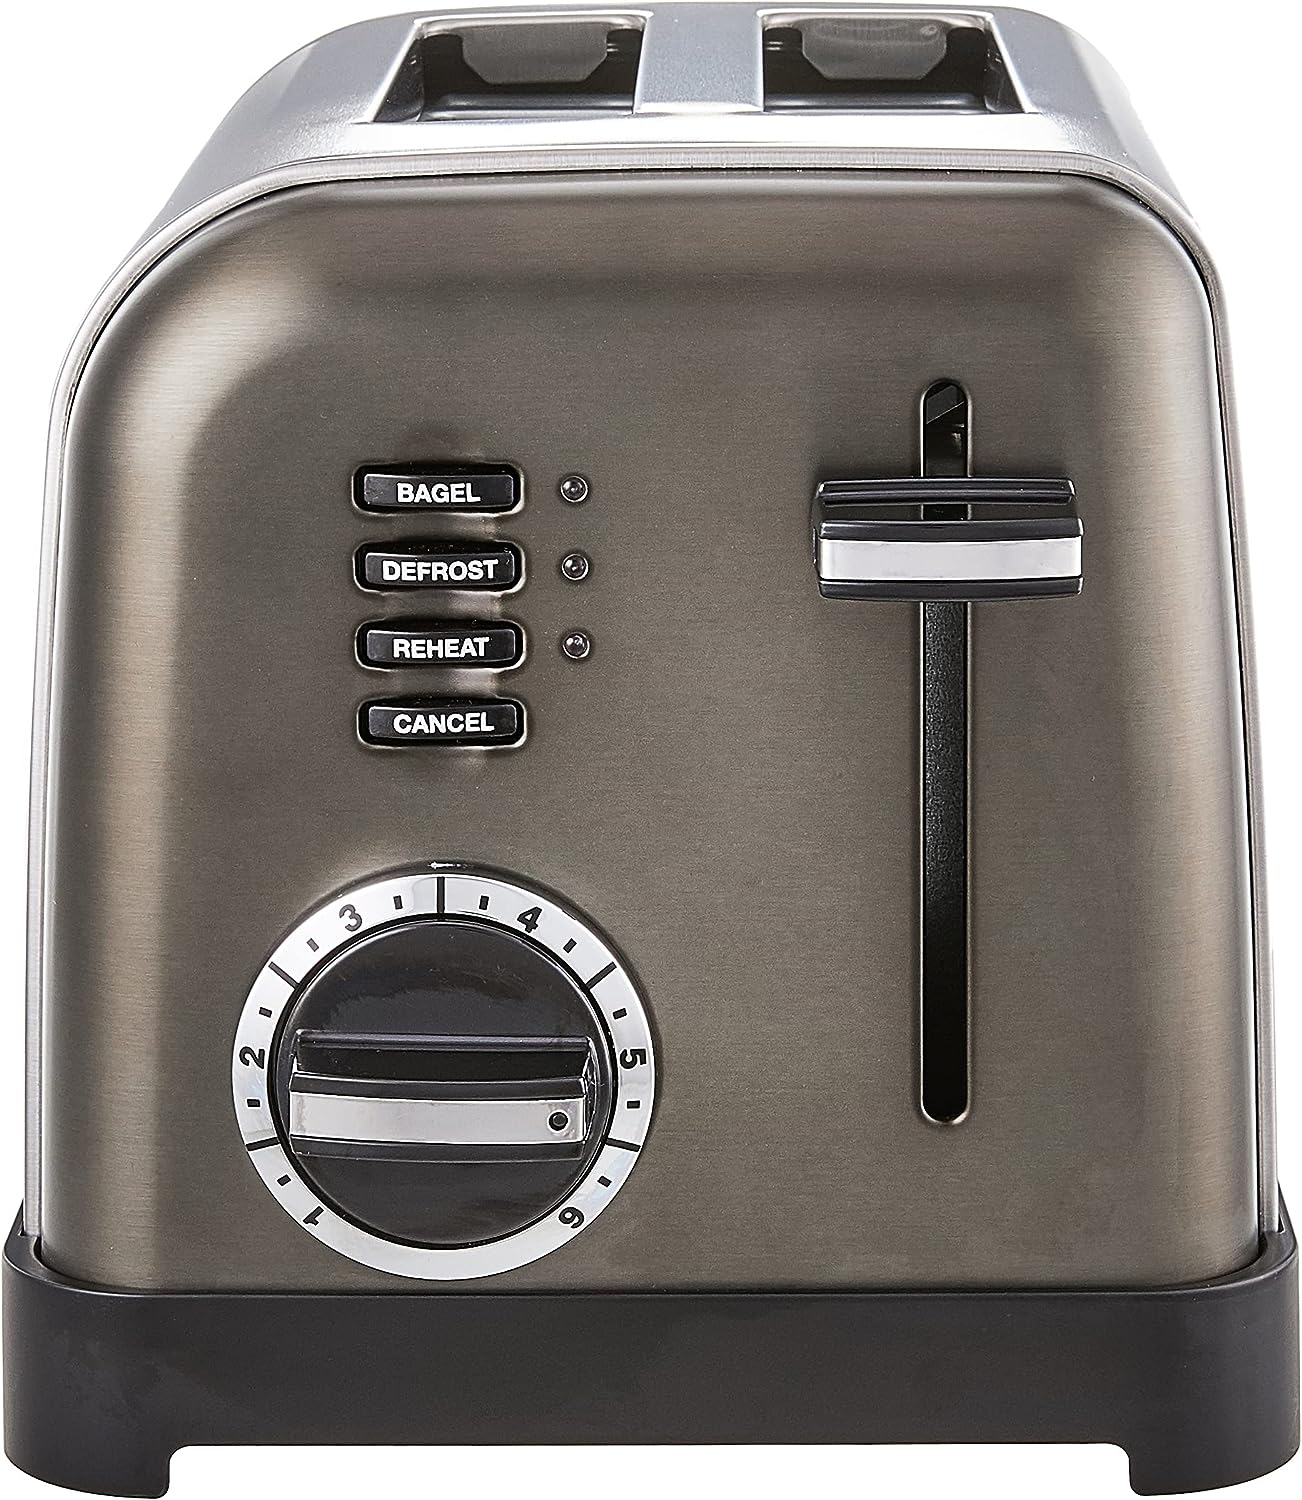 Cuisinart CPT-160BKS 2-Slice Metal Classic Toaster, Stainless Steel/Black - Certified Refurbished